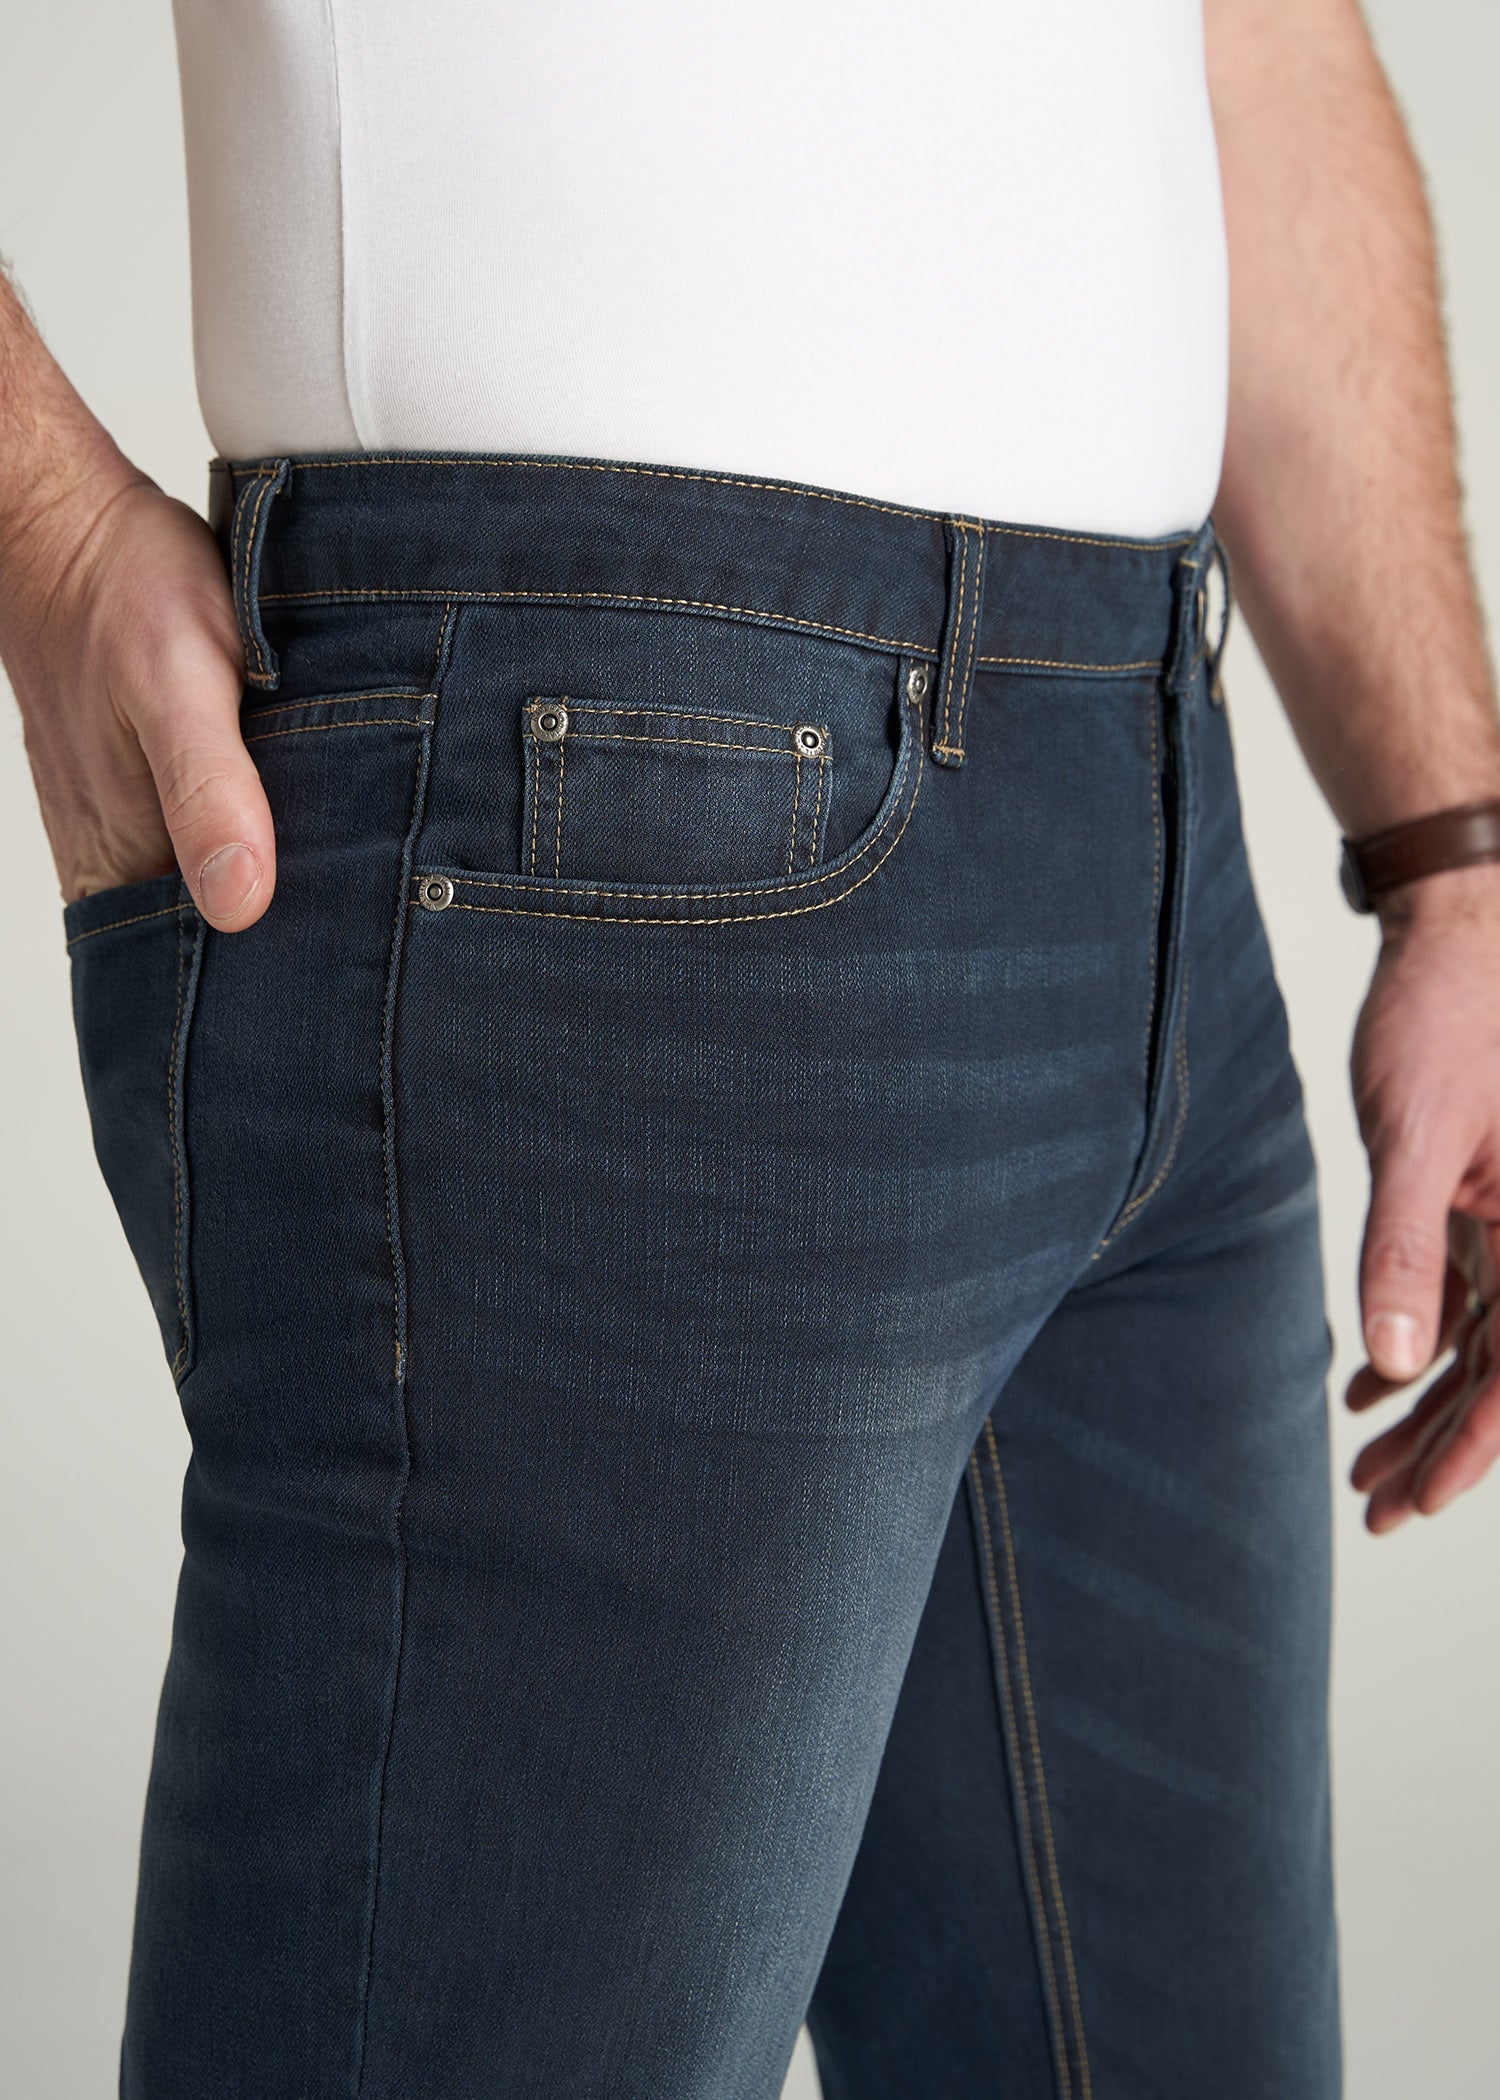    American-Tall-Men-Carman-TaperedFit-Jeans-BlueOnyx-pocket